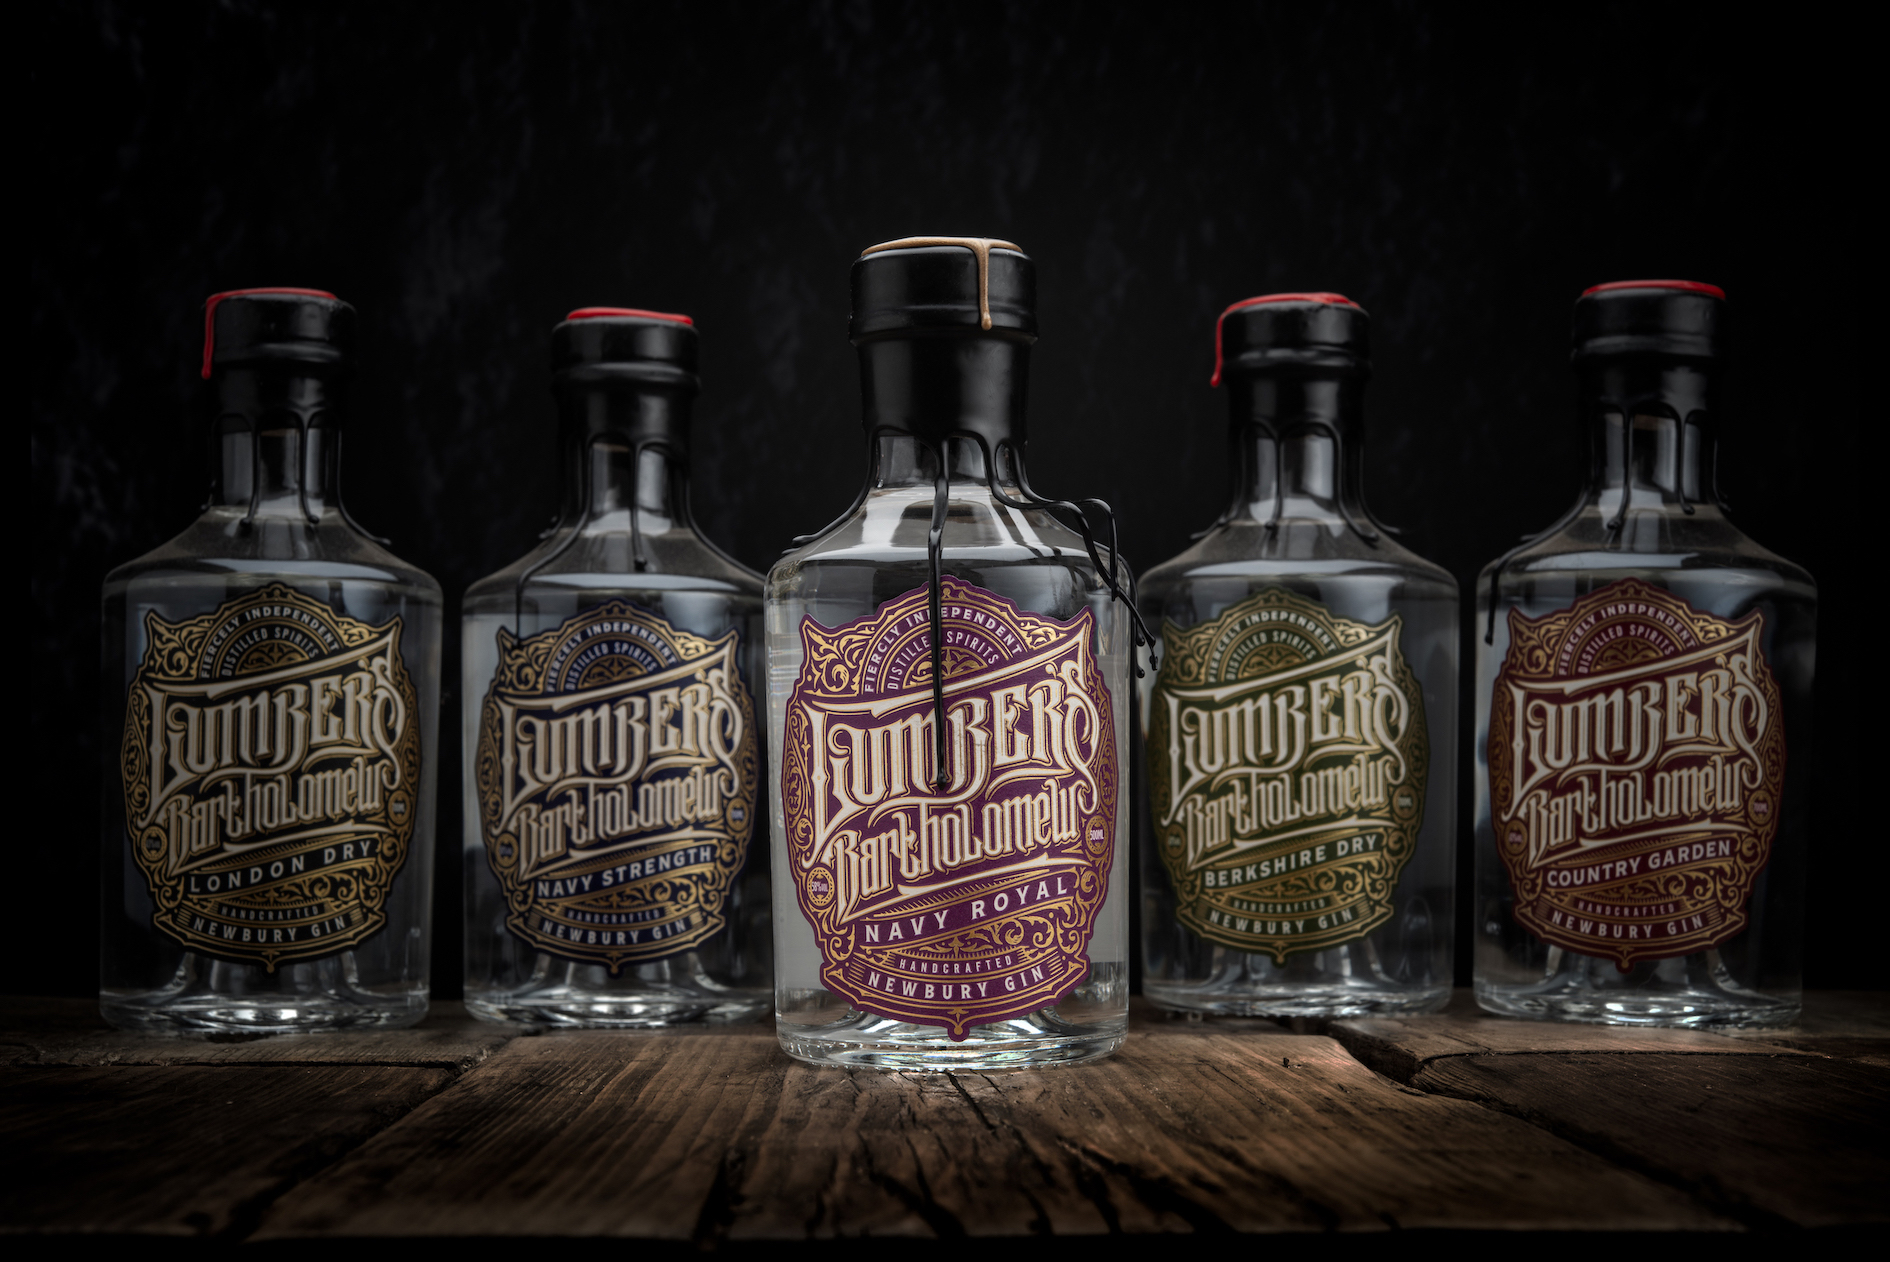 Benjamin Charles Creates Lumber’s Bartholomew Navy Royal Gin Brand and Packaging Design